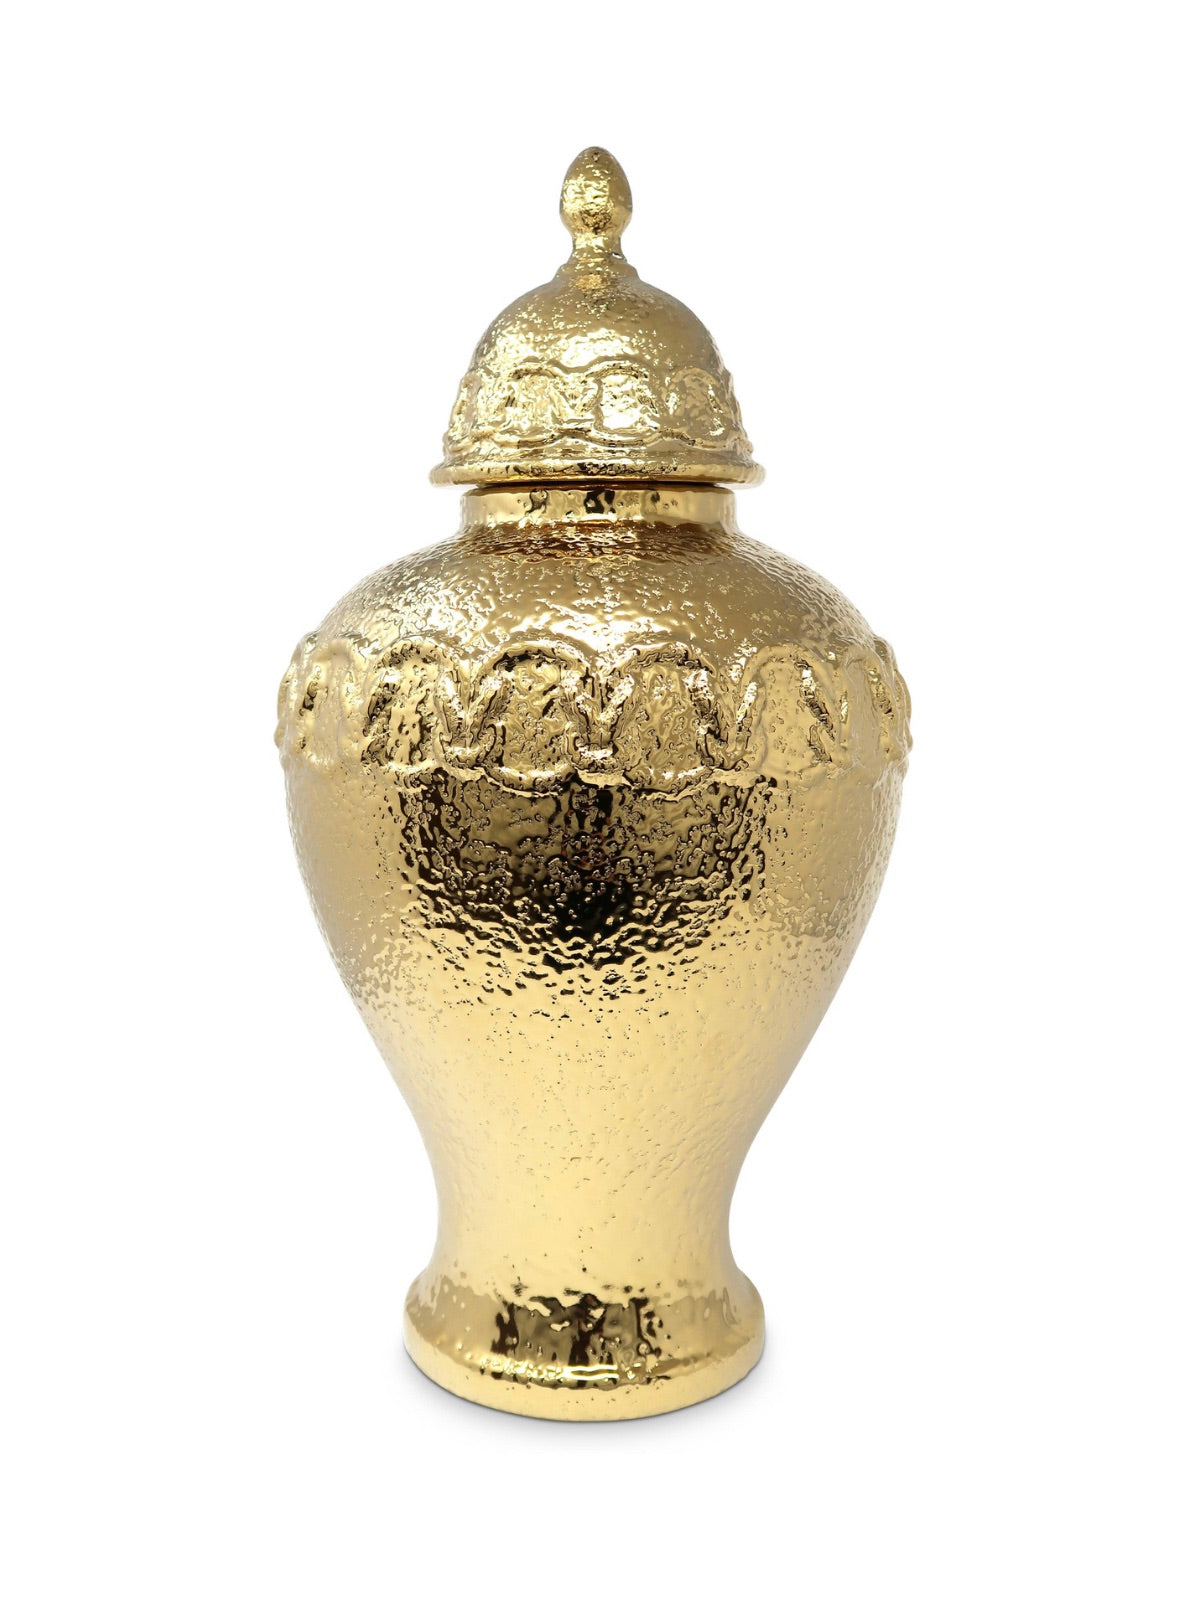 Gold Ceramic Ginger Jar with Stunning Gold Chain Details, Size Medium